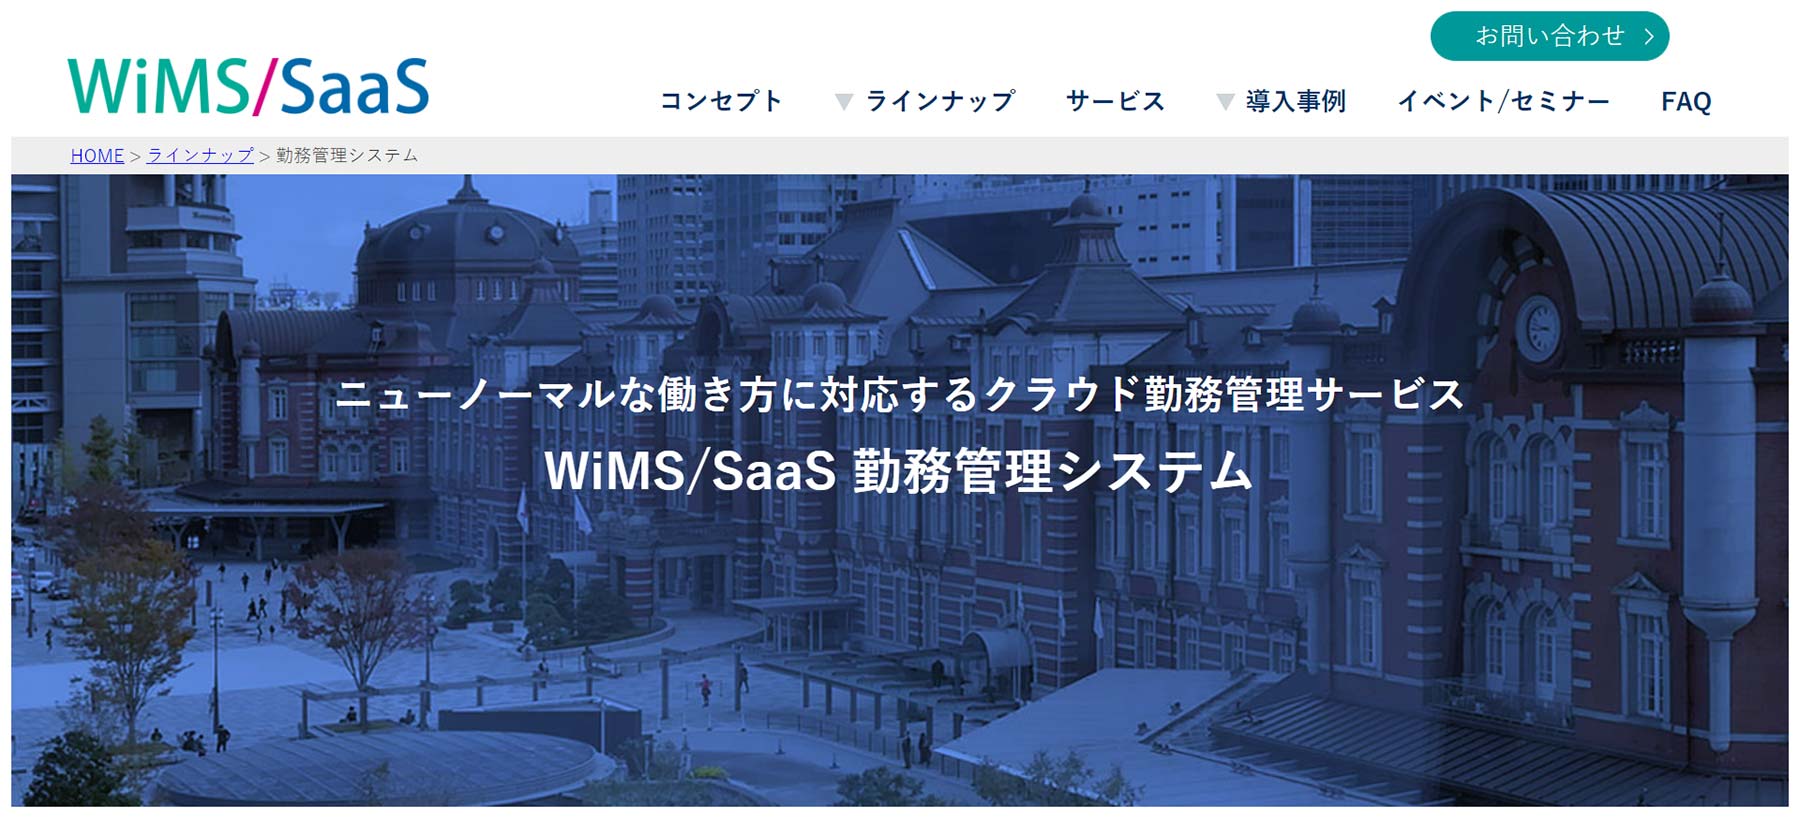 WiMS/SaaS勤怠管理システム公式Webサイト